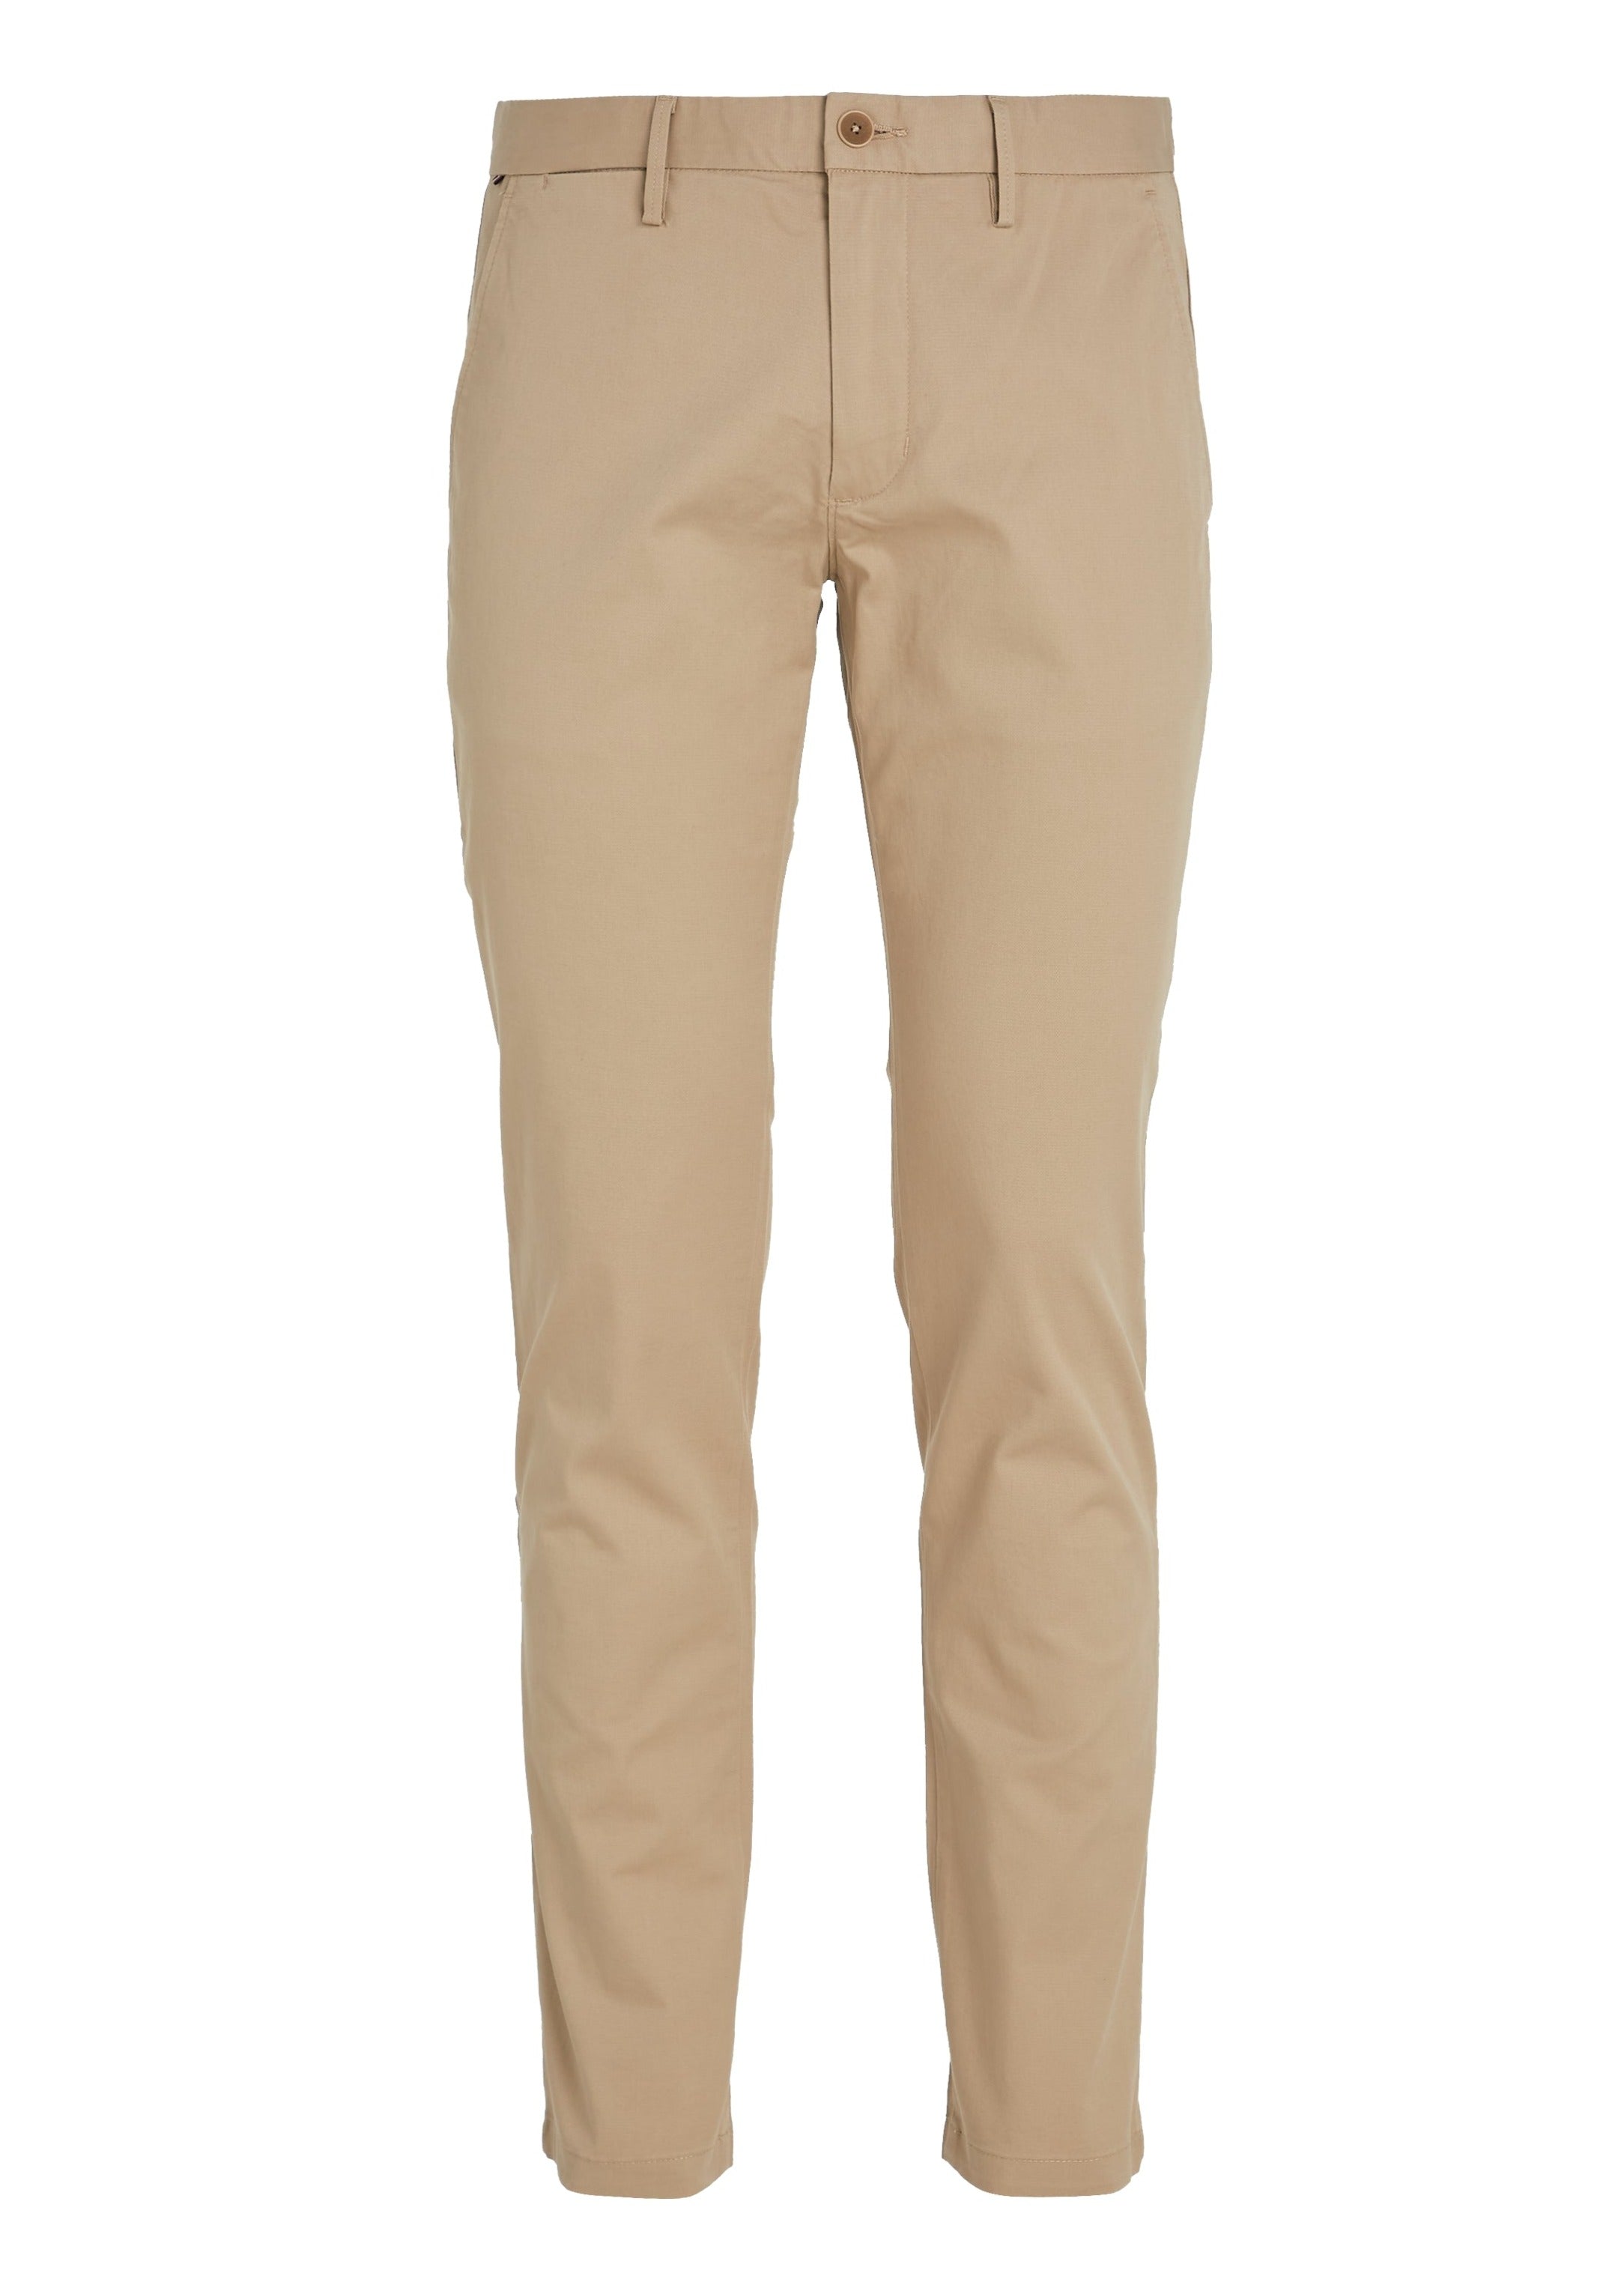 Pantalon chino Tommy Hilfiger beige en coton bio stretch | Georgespaul